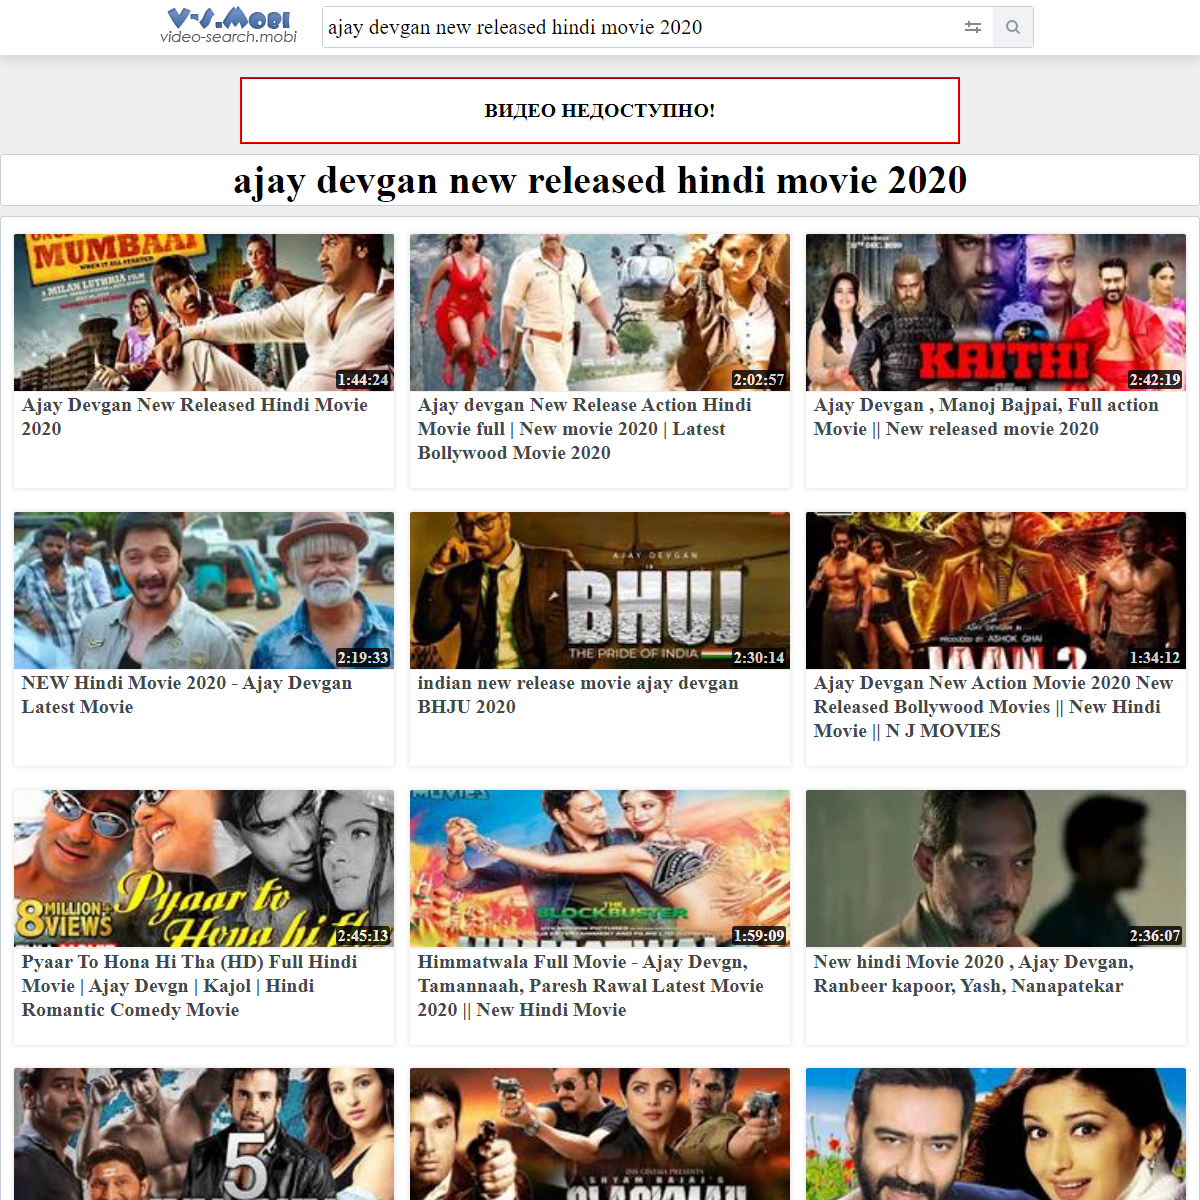 A complete backup of https://v-s.mobi/ajay-devgan-new-released-hindi-movie-2020-1:44:24